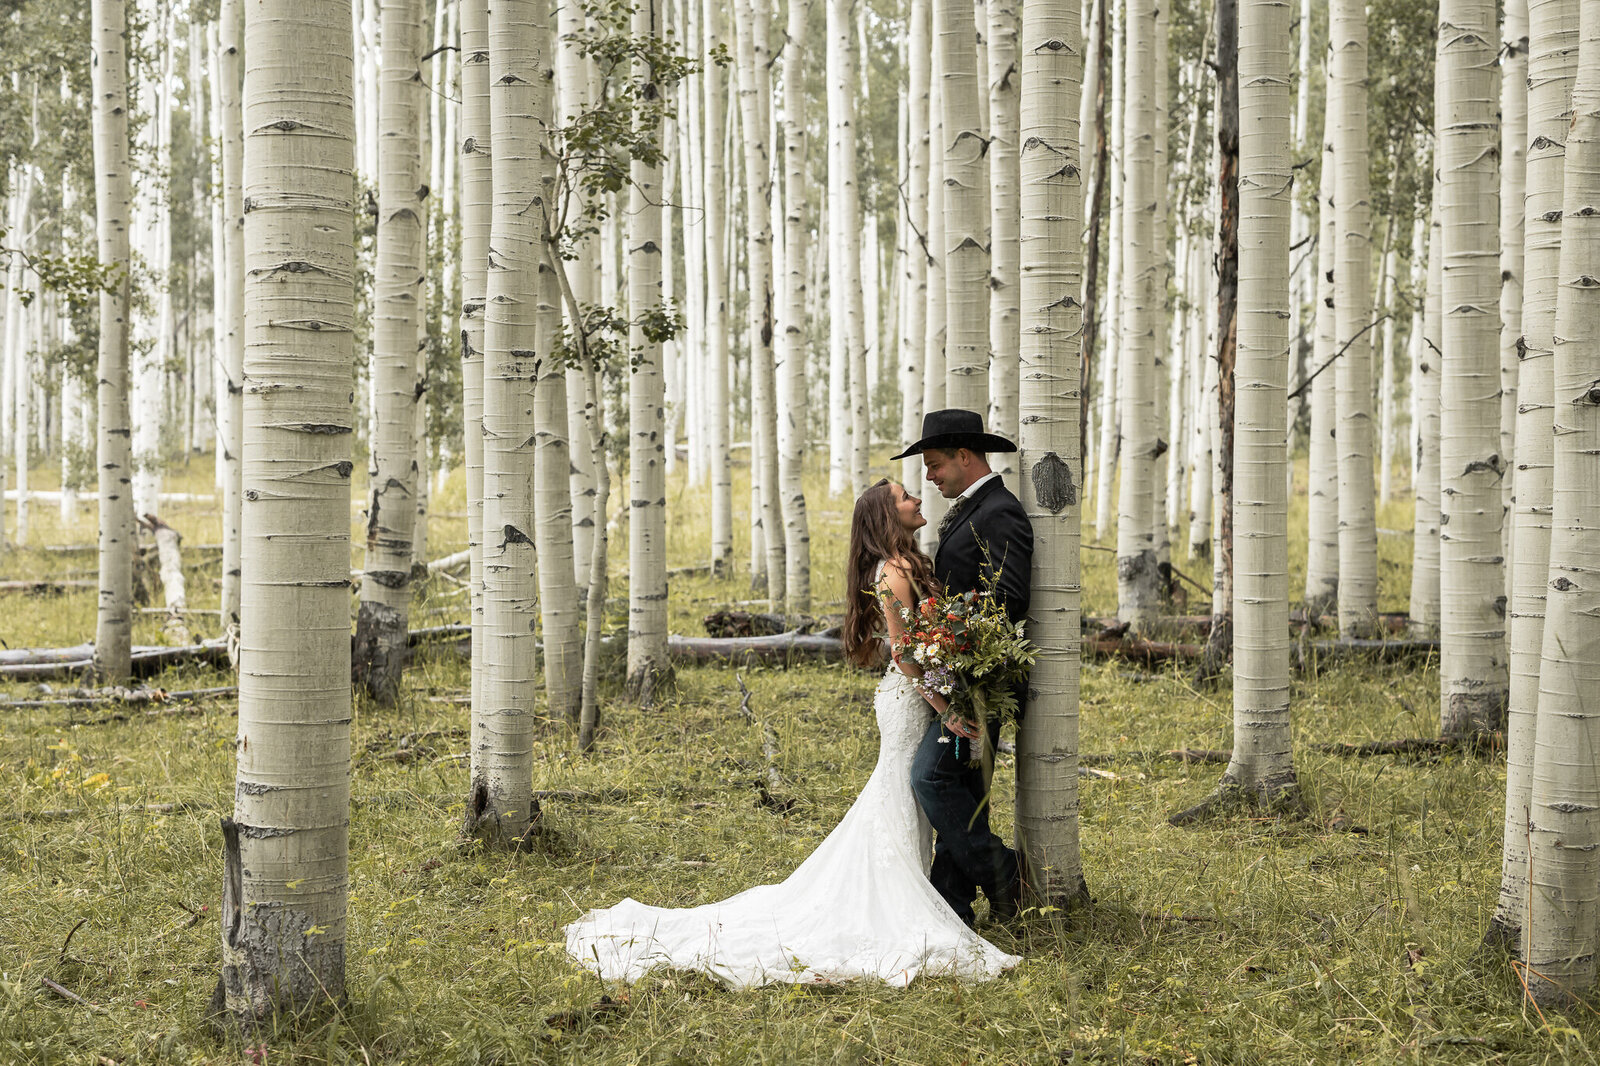 Adventure elopement and micro-wedding photography near Tulsa Oklahoma